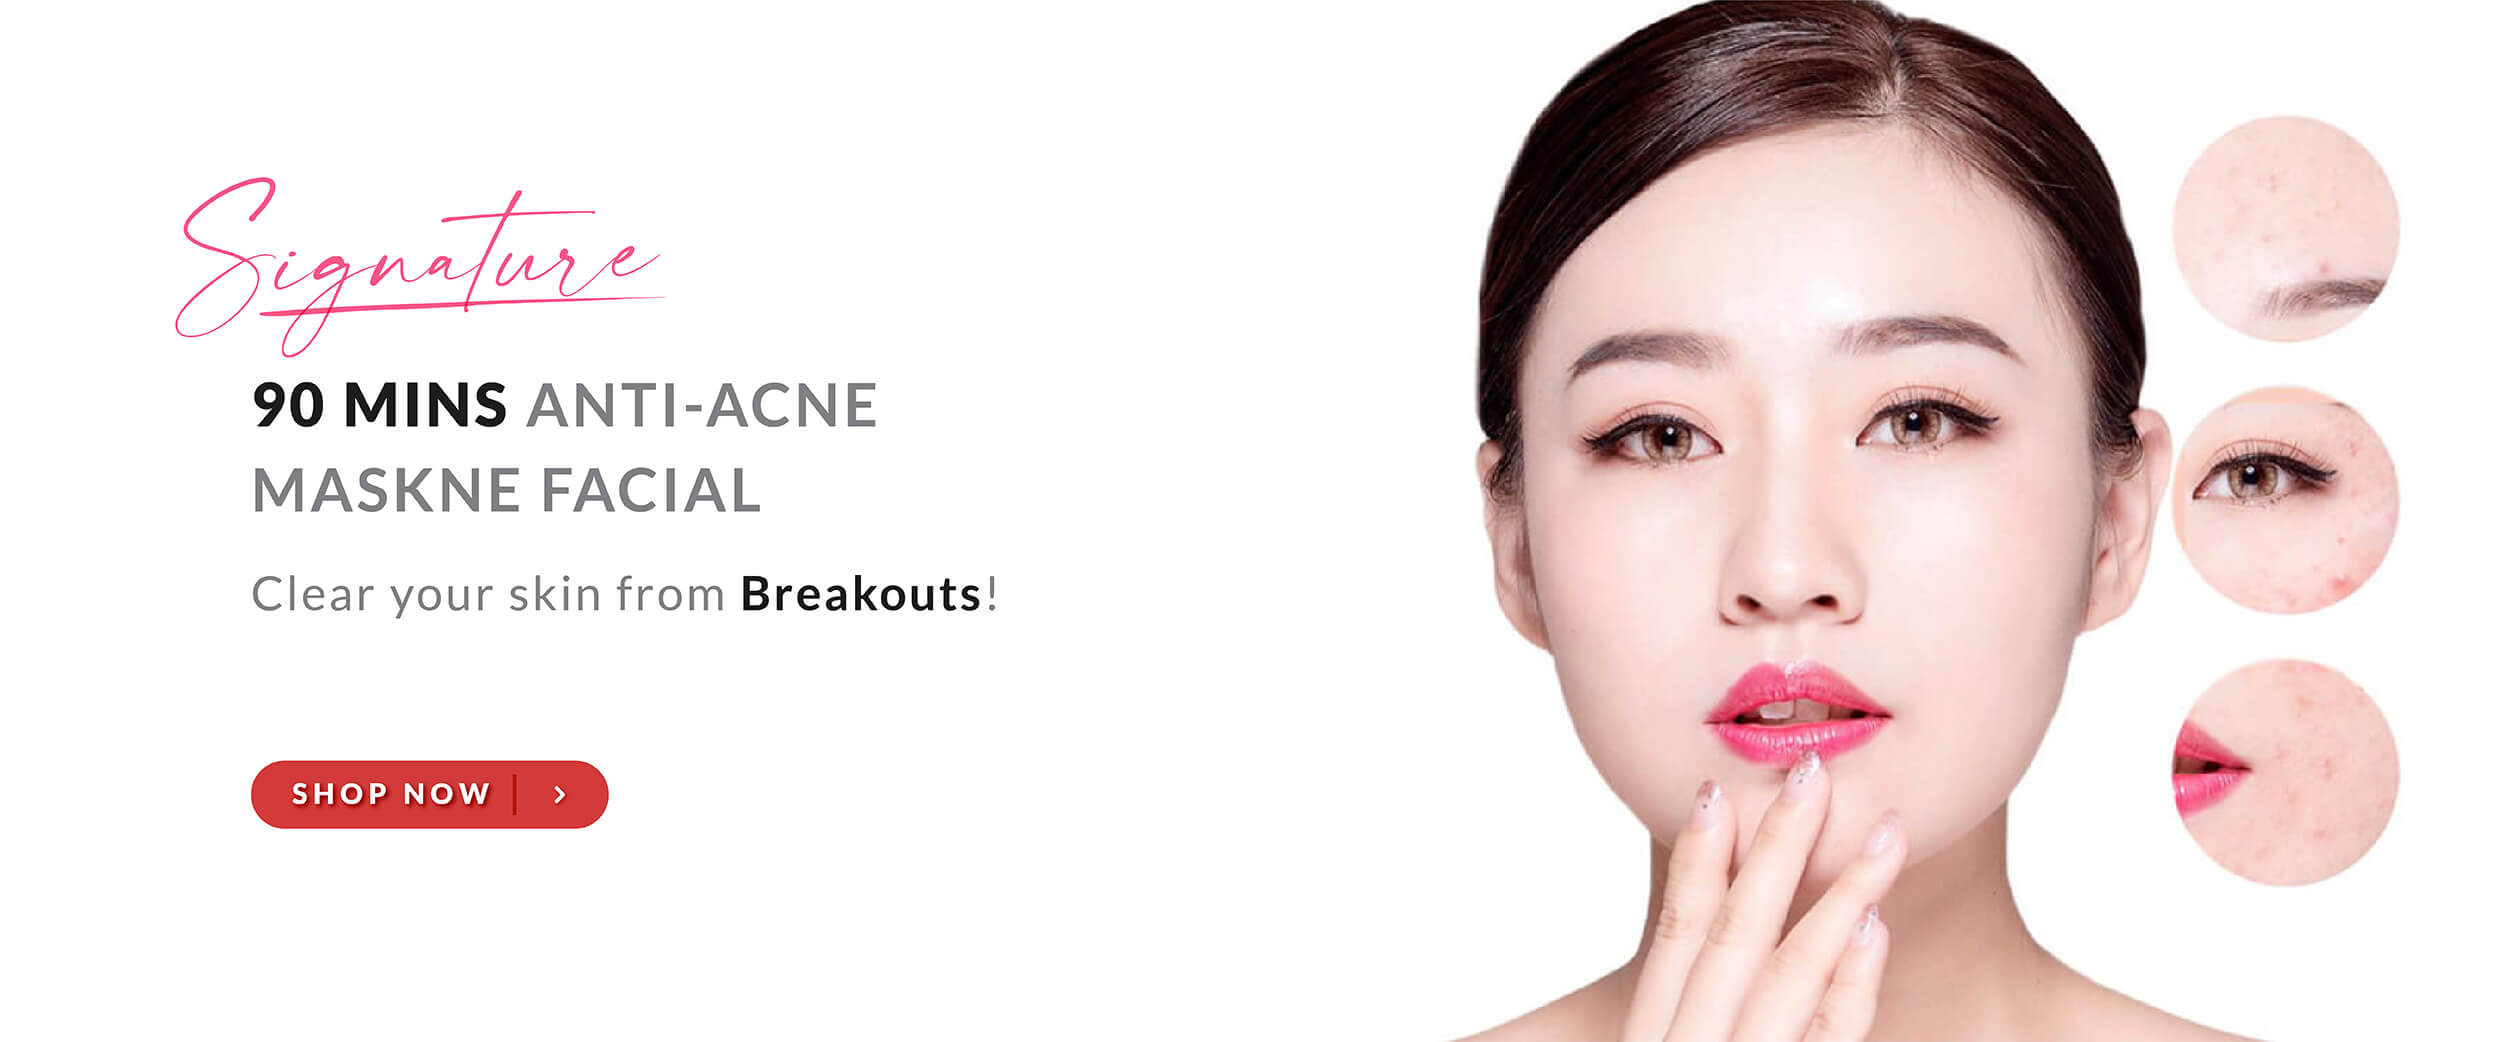 Anti-Acne Maskne Facial Web Banner (1)